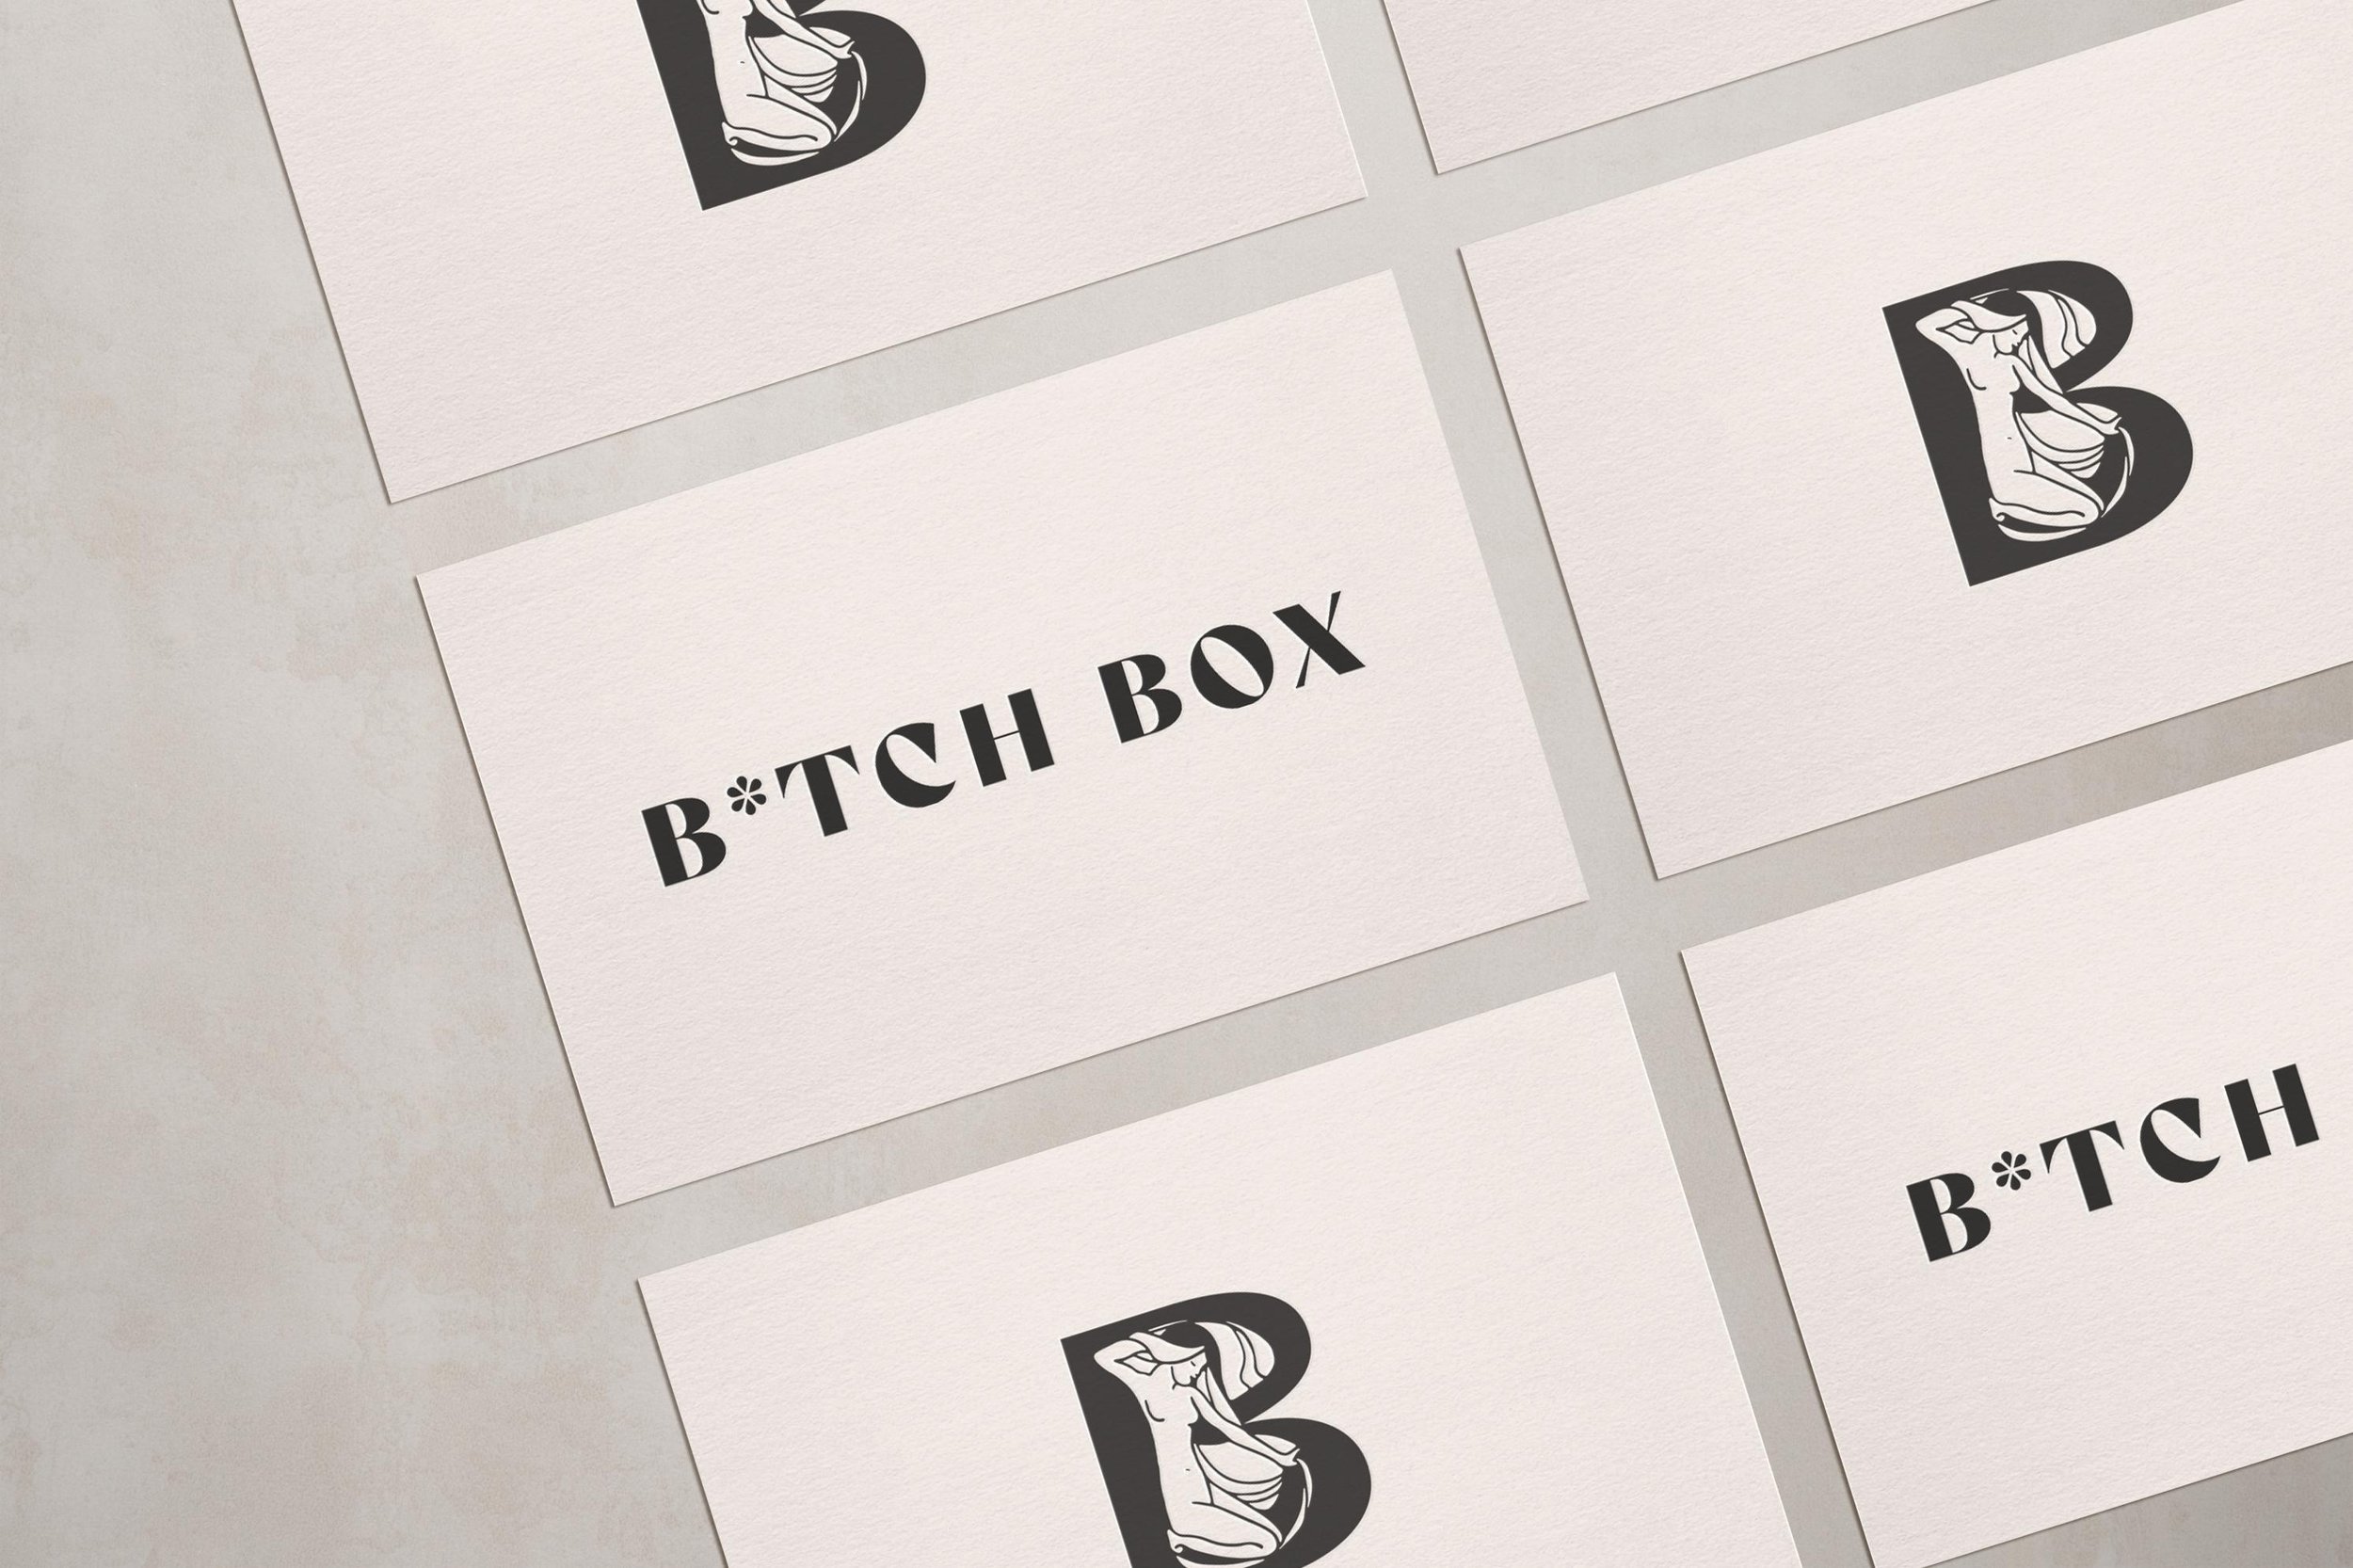 bitch box business cards.jpg